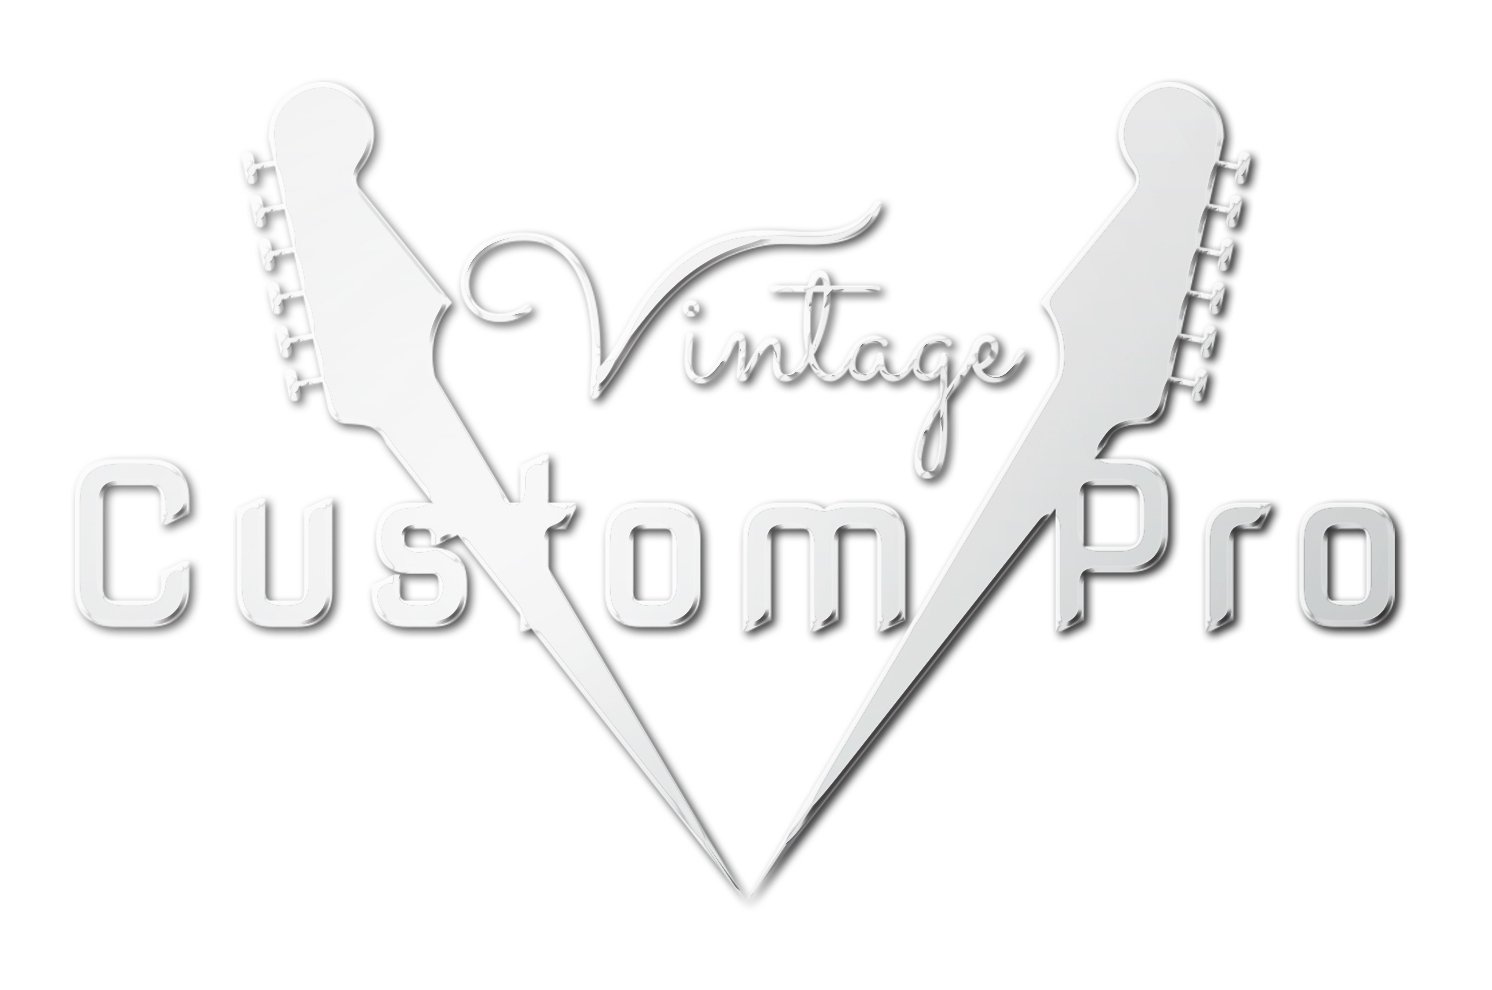 Vintage* VS6VW Electric Guitar, Electric Guitar for sale at Richards Guitars.